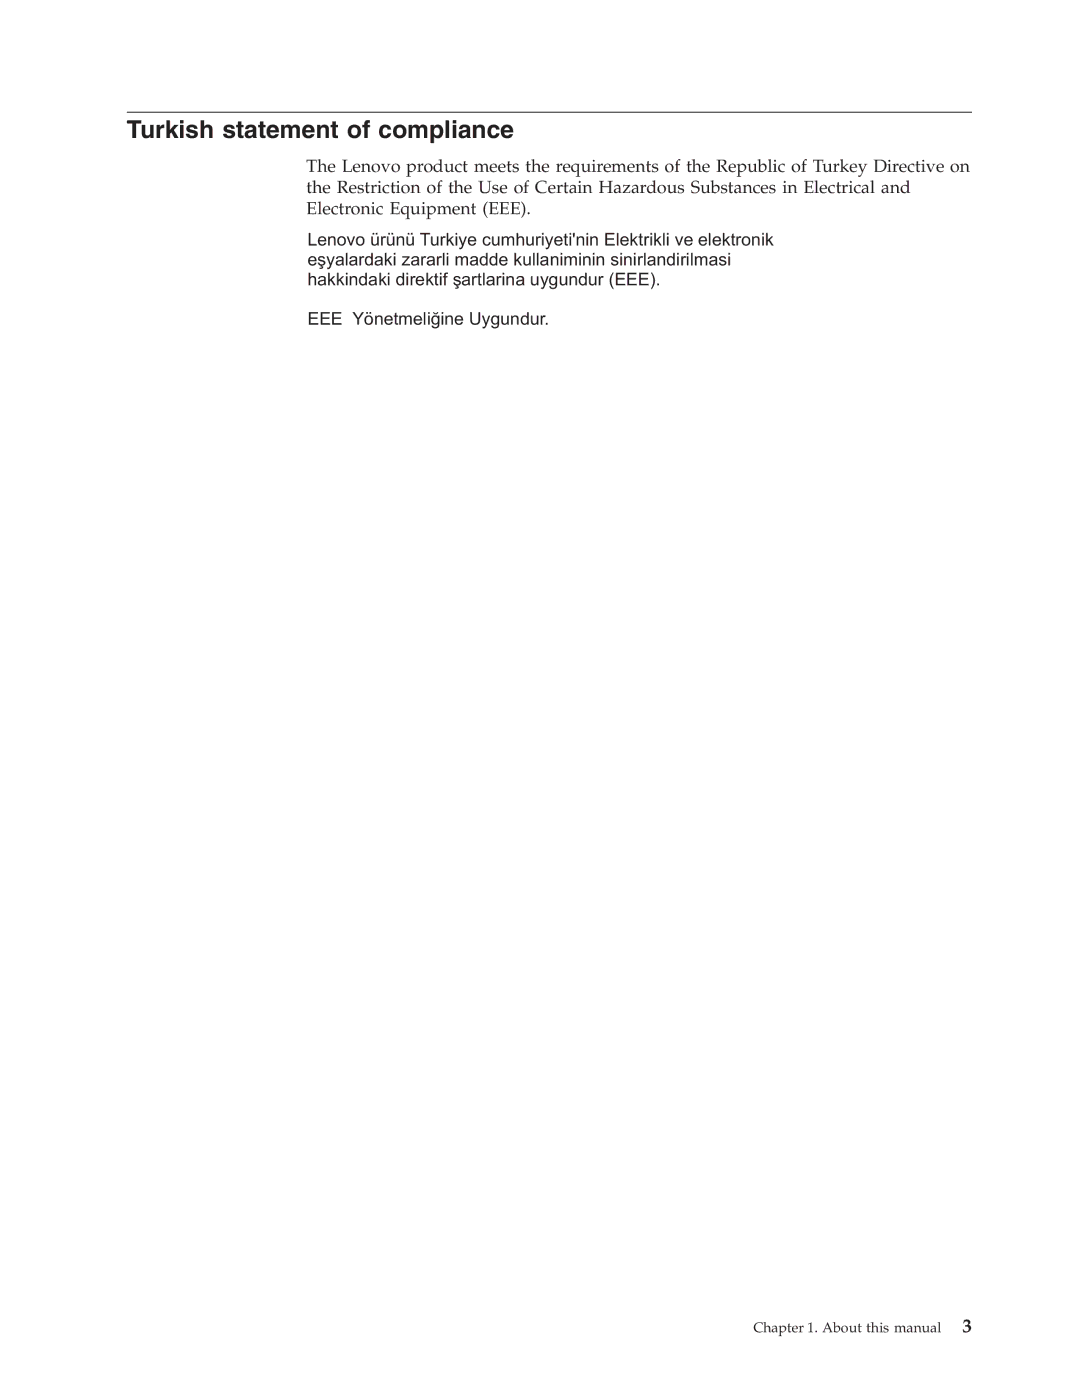 Lenovo E200 manual Turkish statement of compliance 